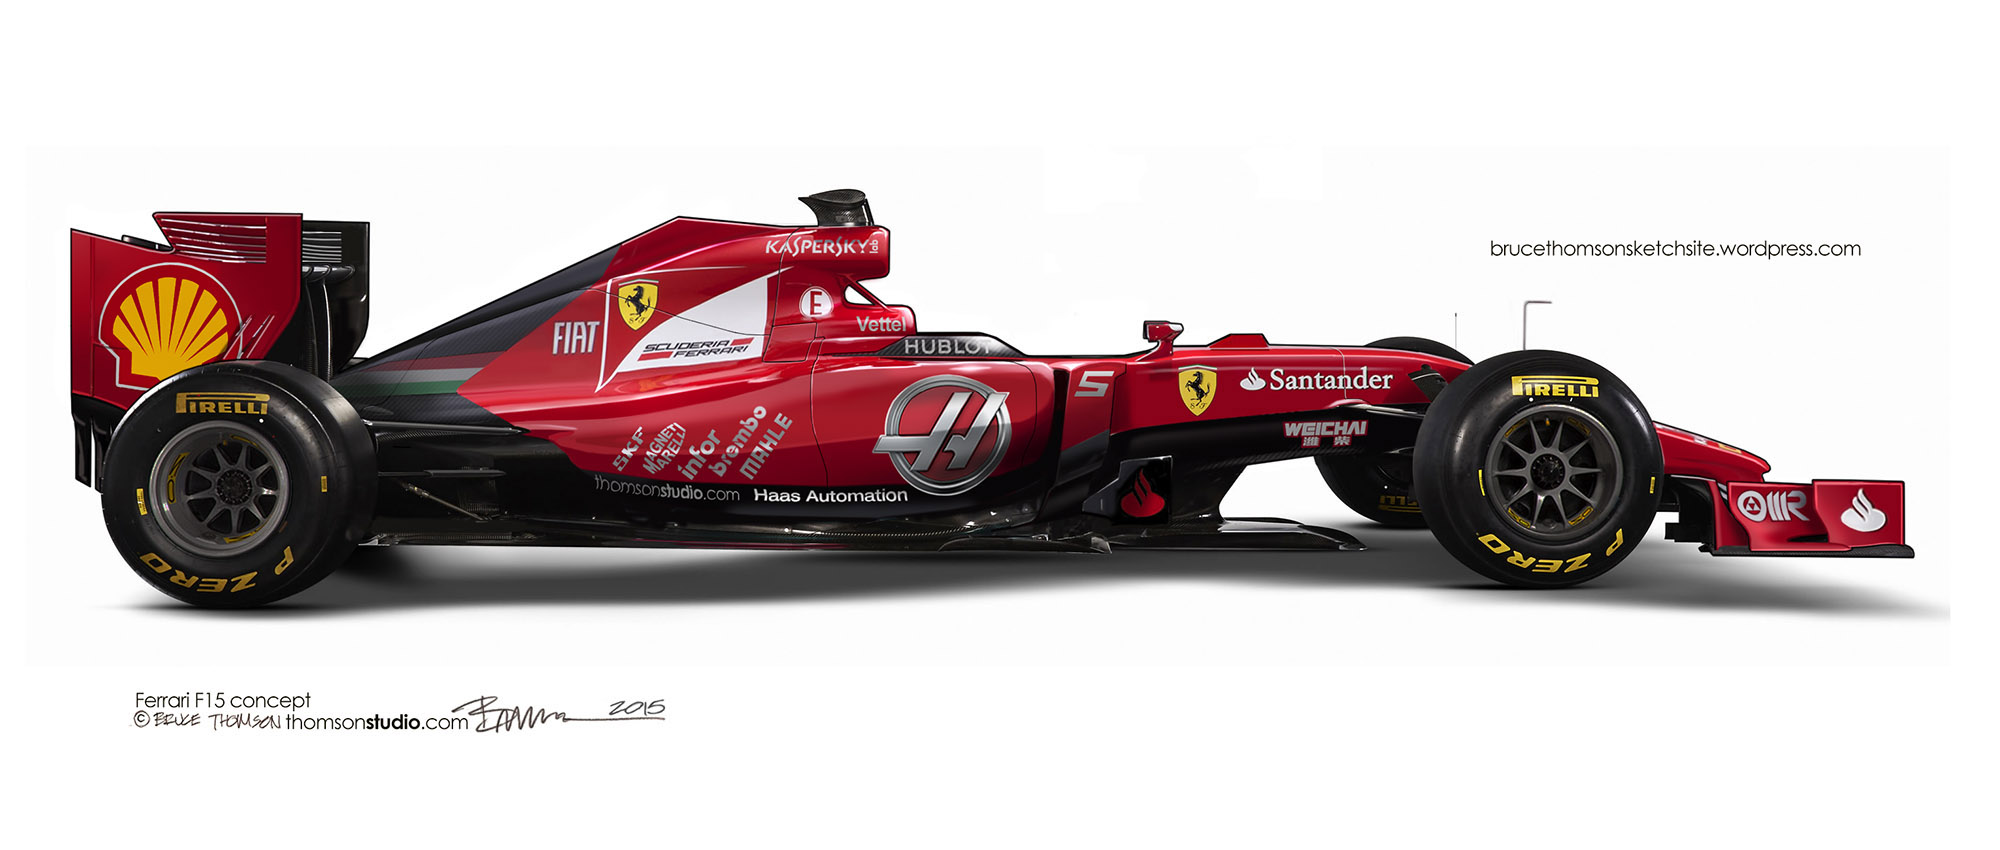 15 Ferrari F15 Concept Caught In My Headlights